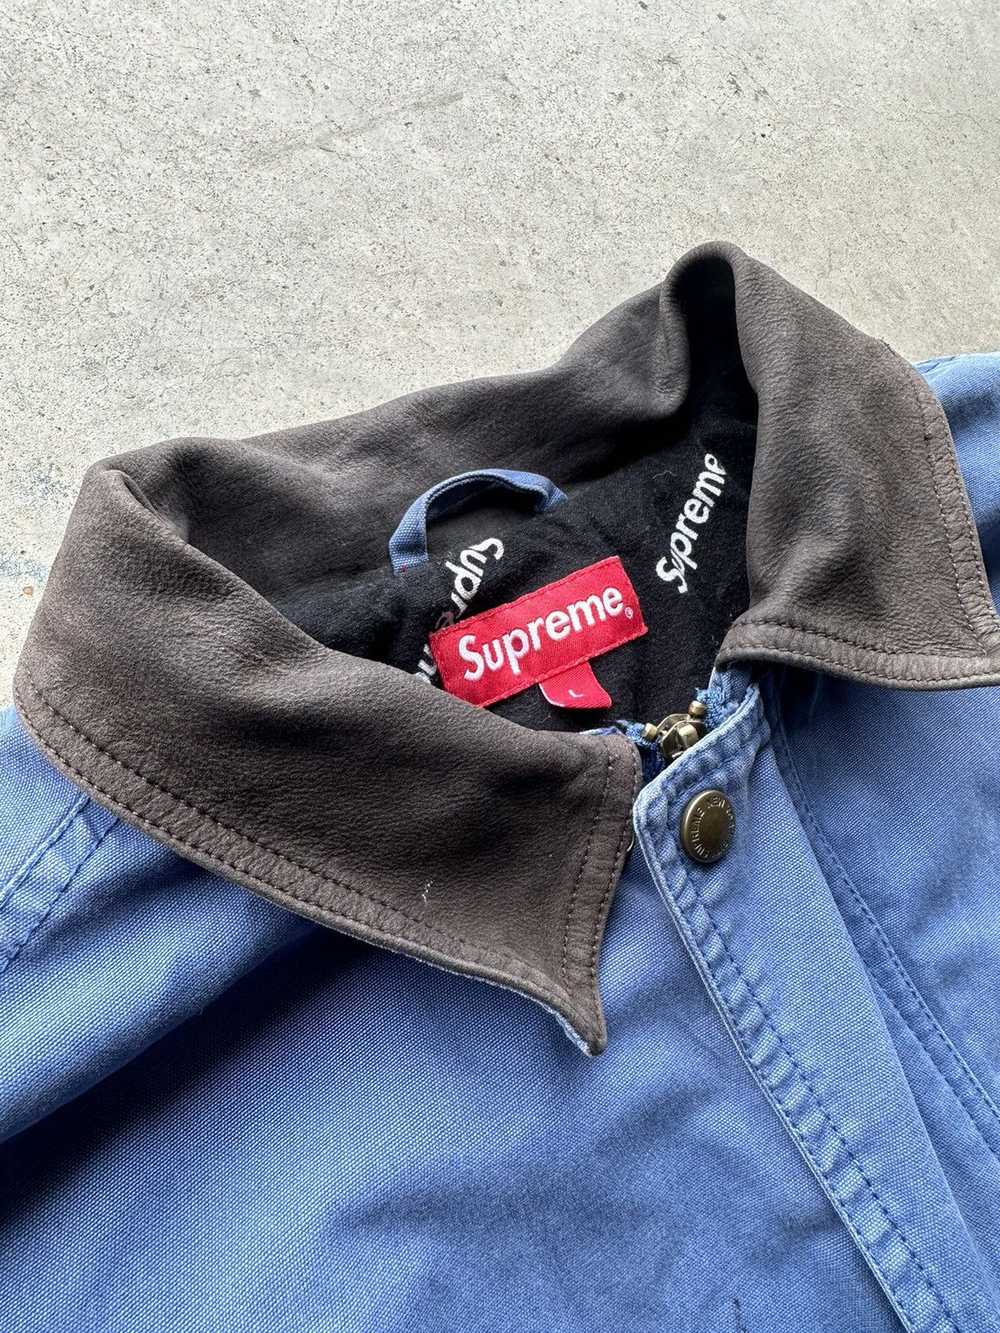 Supreme Supreme Work Jacket - image 3